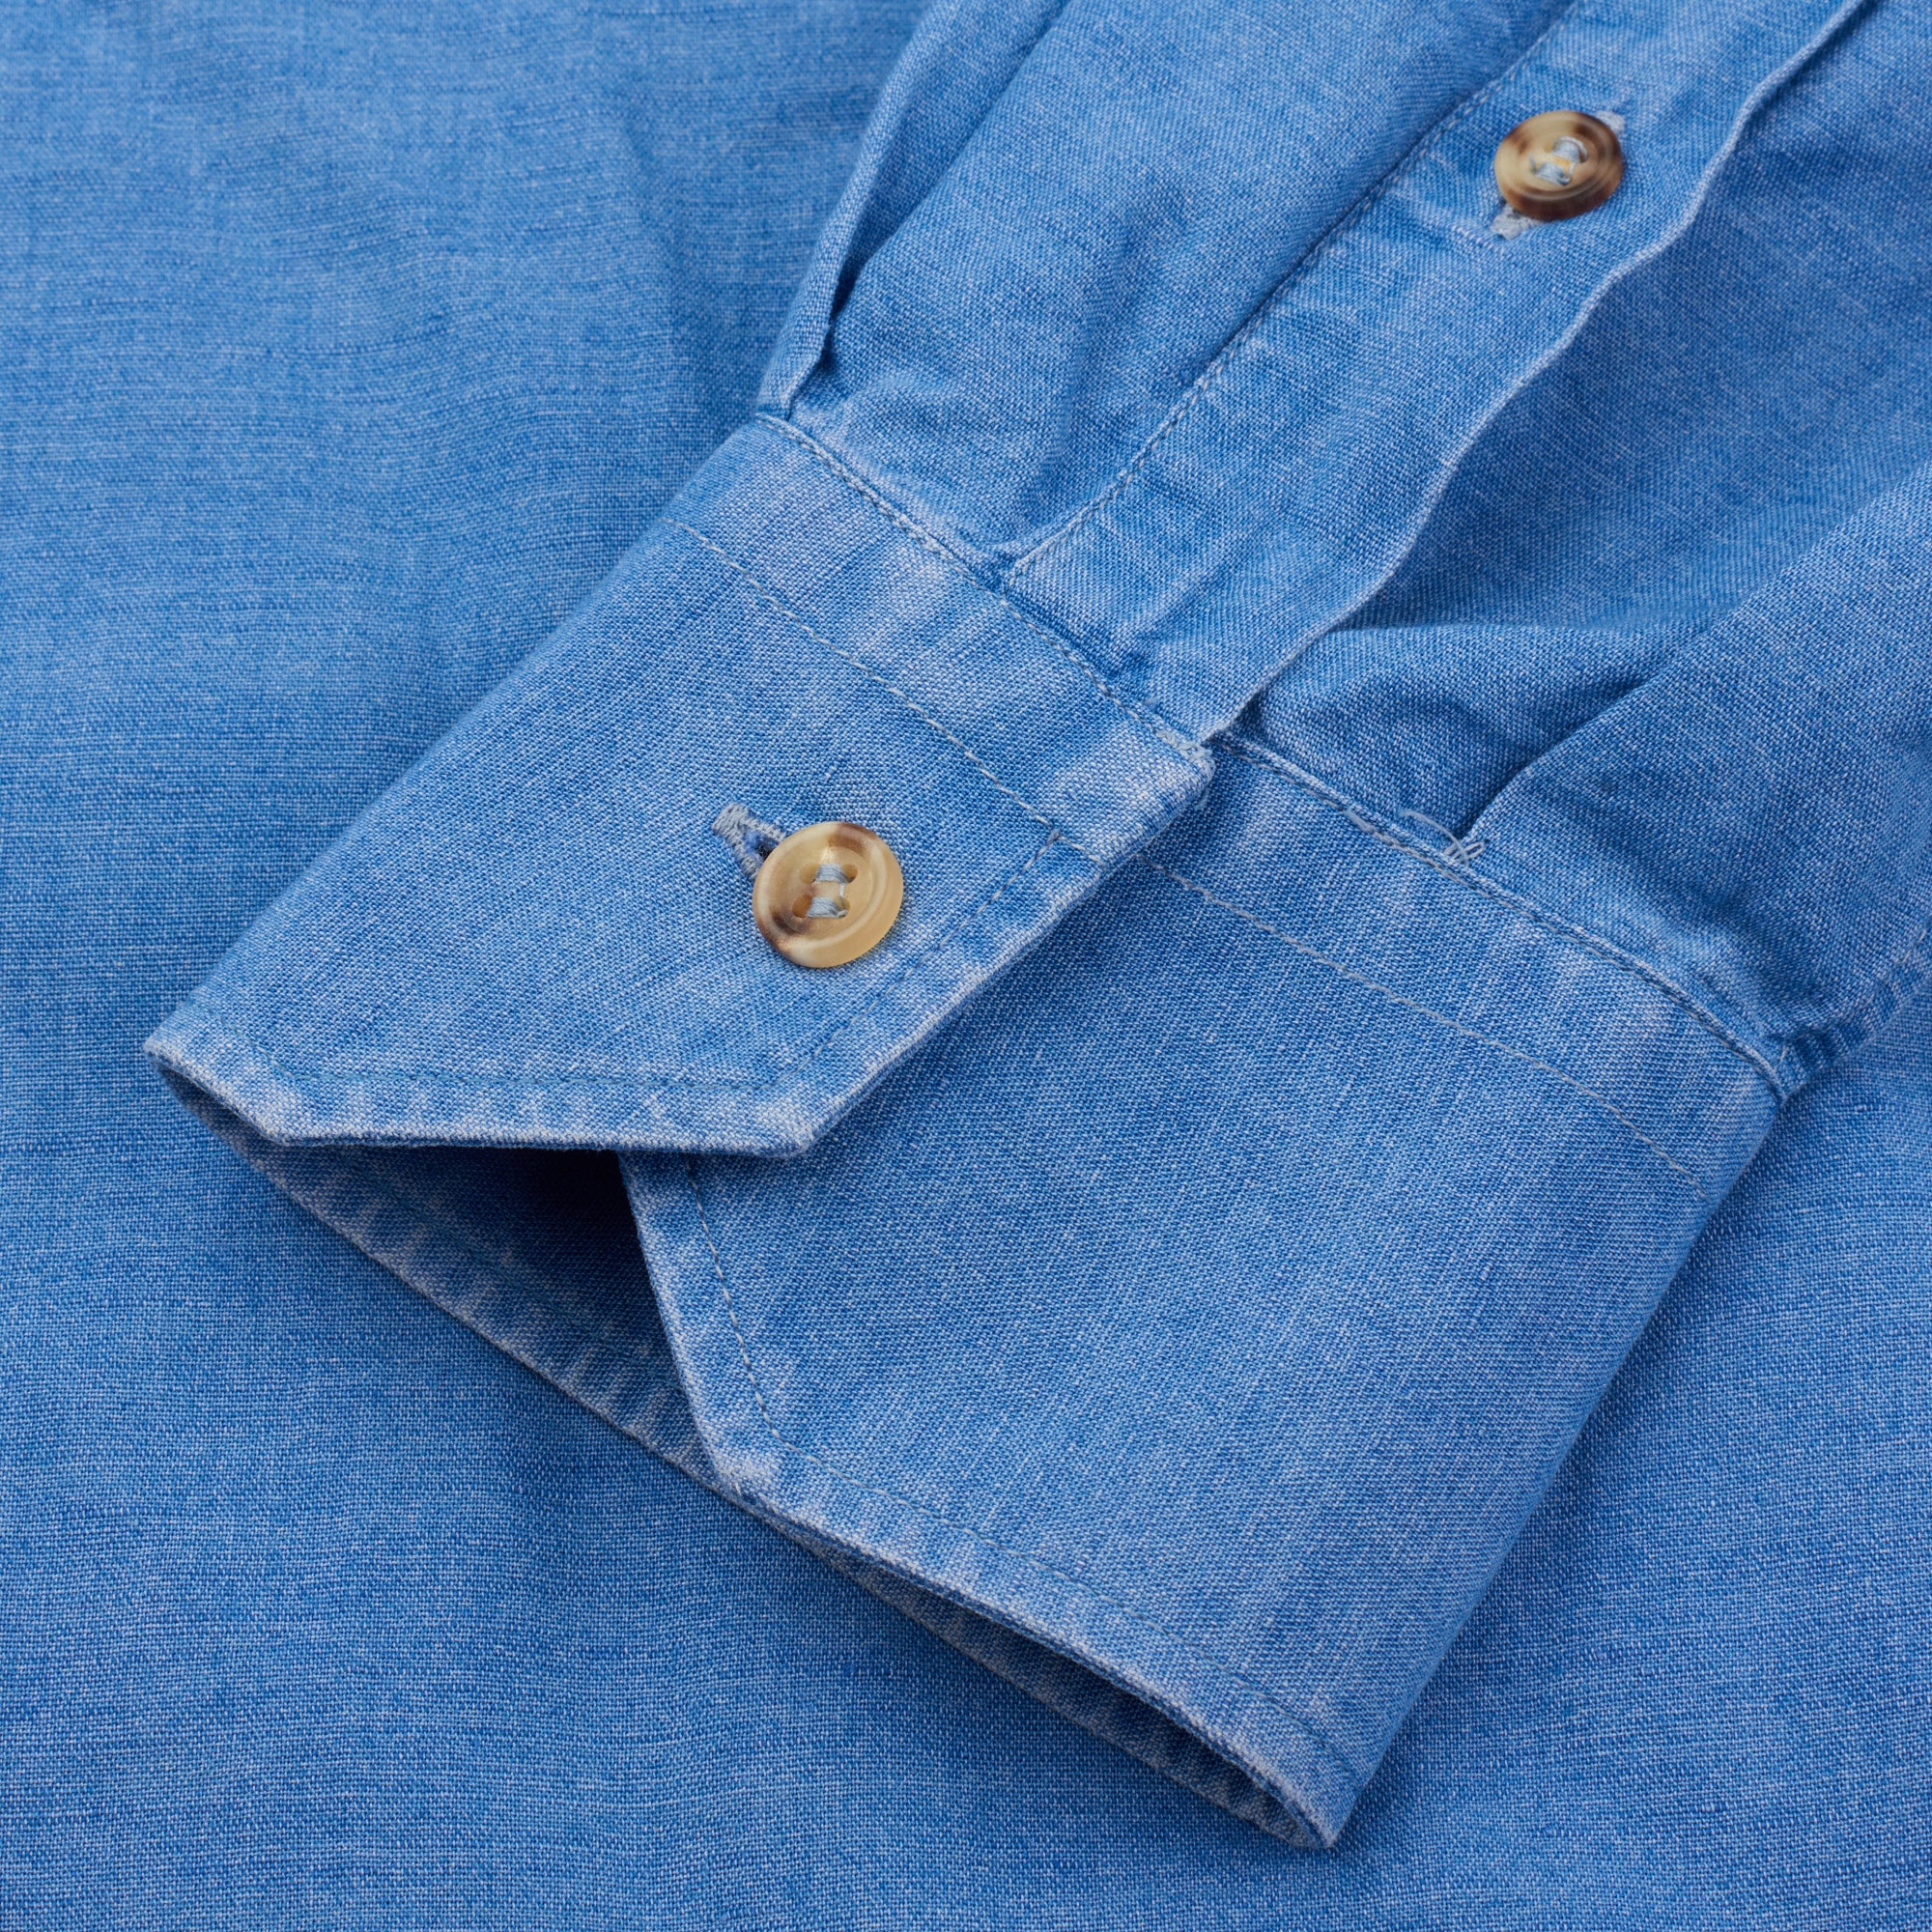 BRUNELLO CUCINELLI Blue Linen-Cotton Button-Down Casual Shirt Size M Basic Fit BRUNELLO CUCINELLI